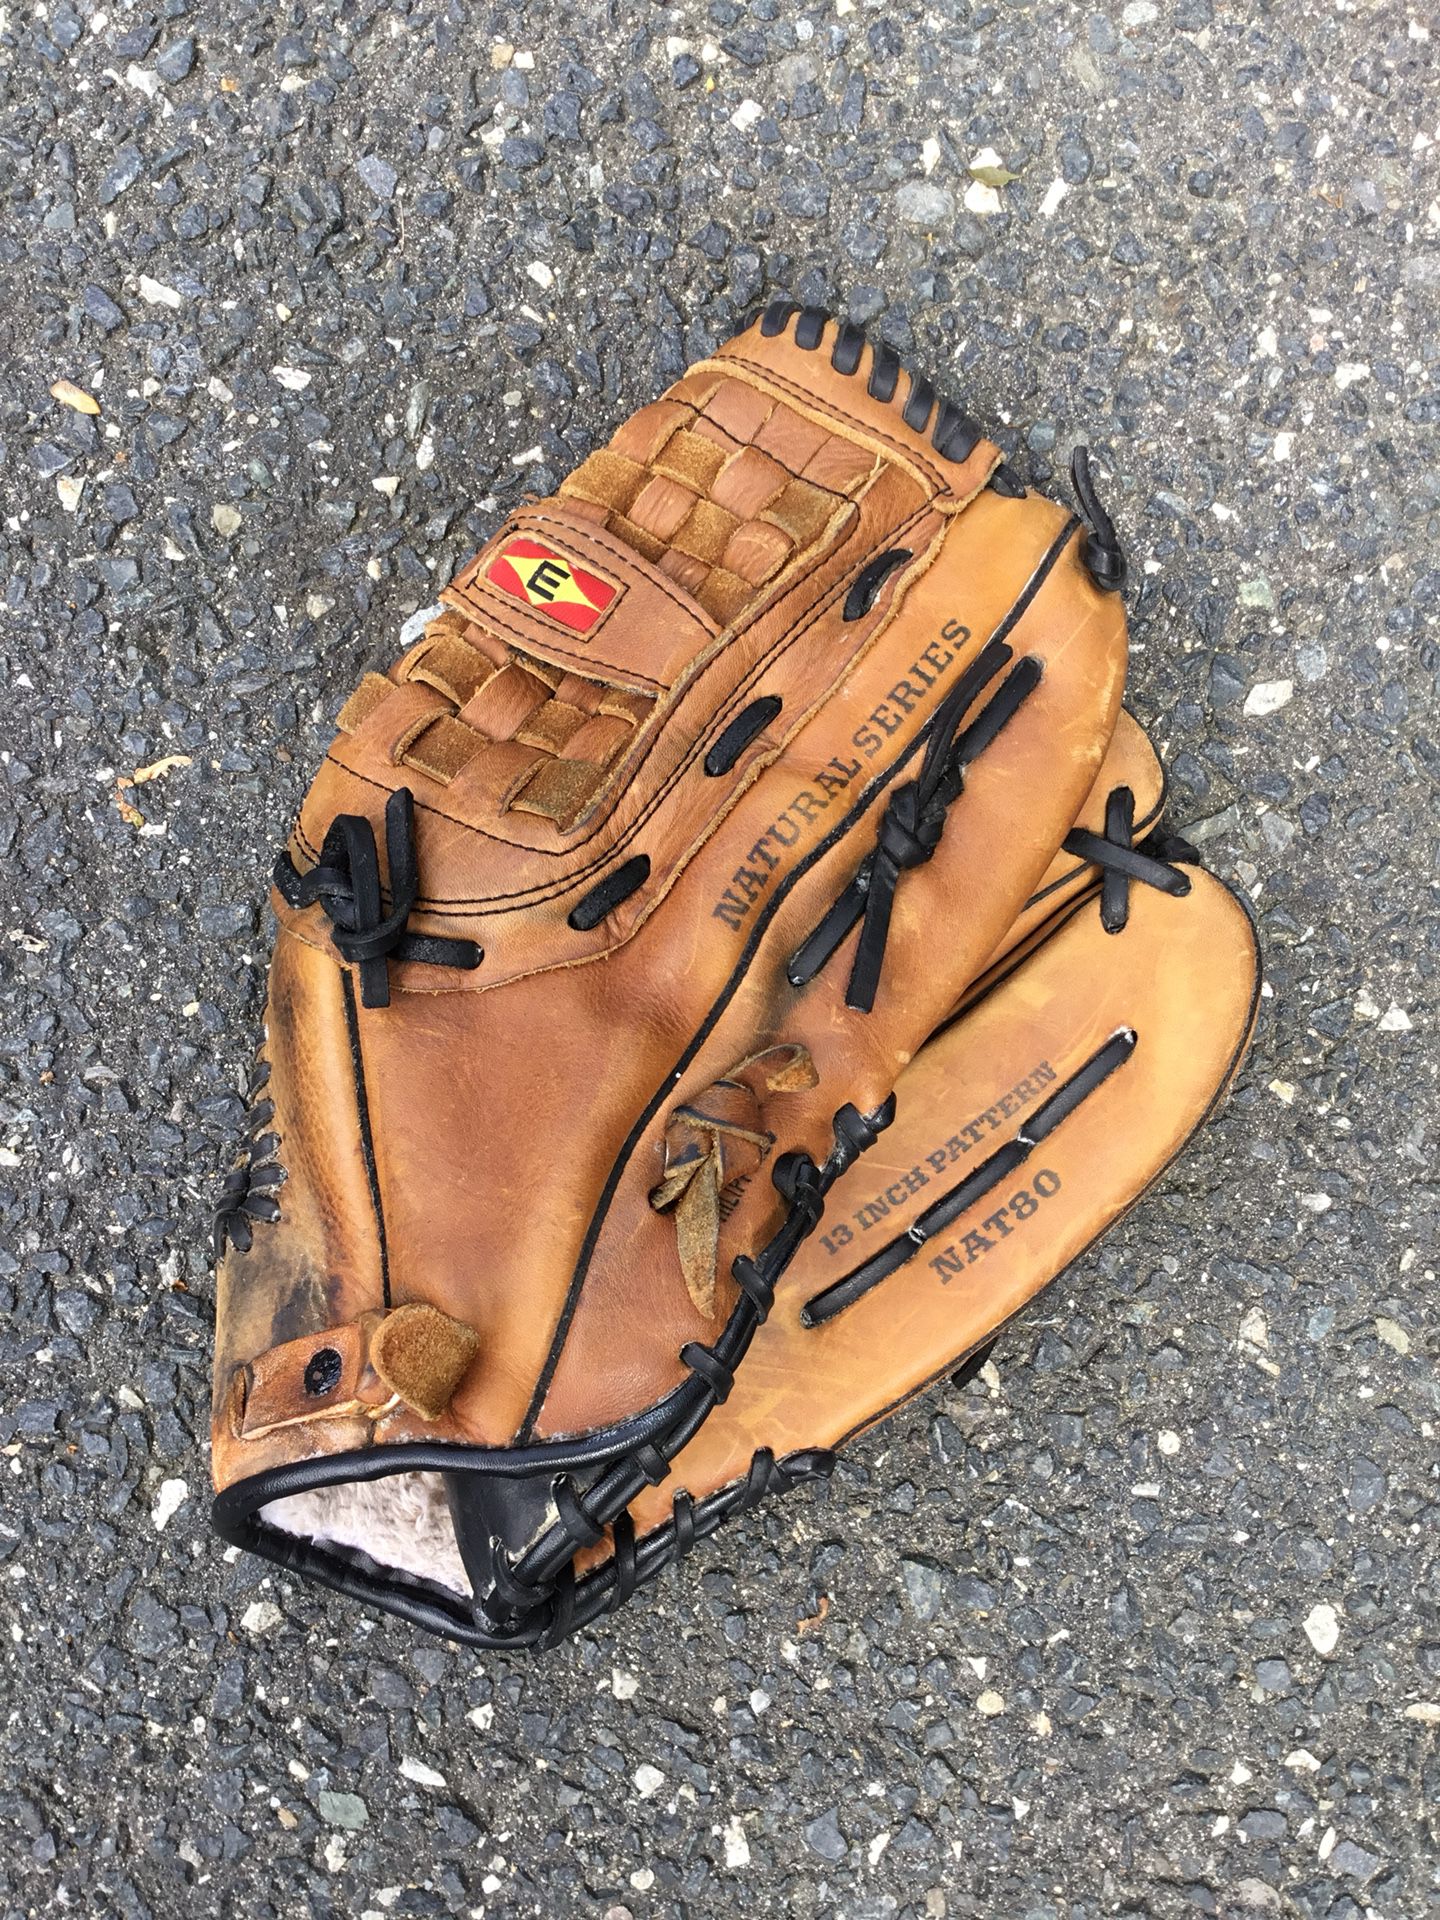 Adult 13 inch baseball glove